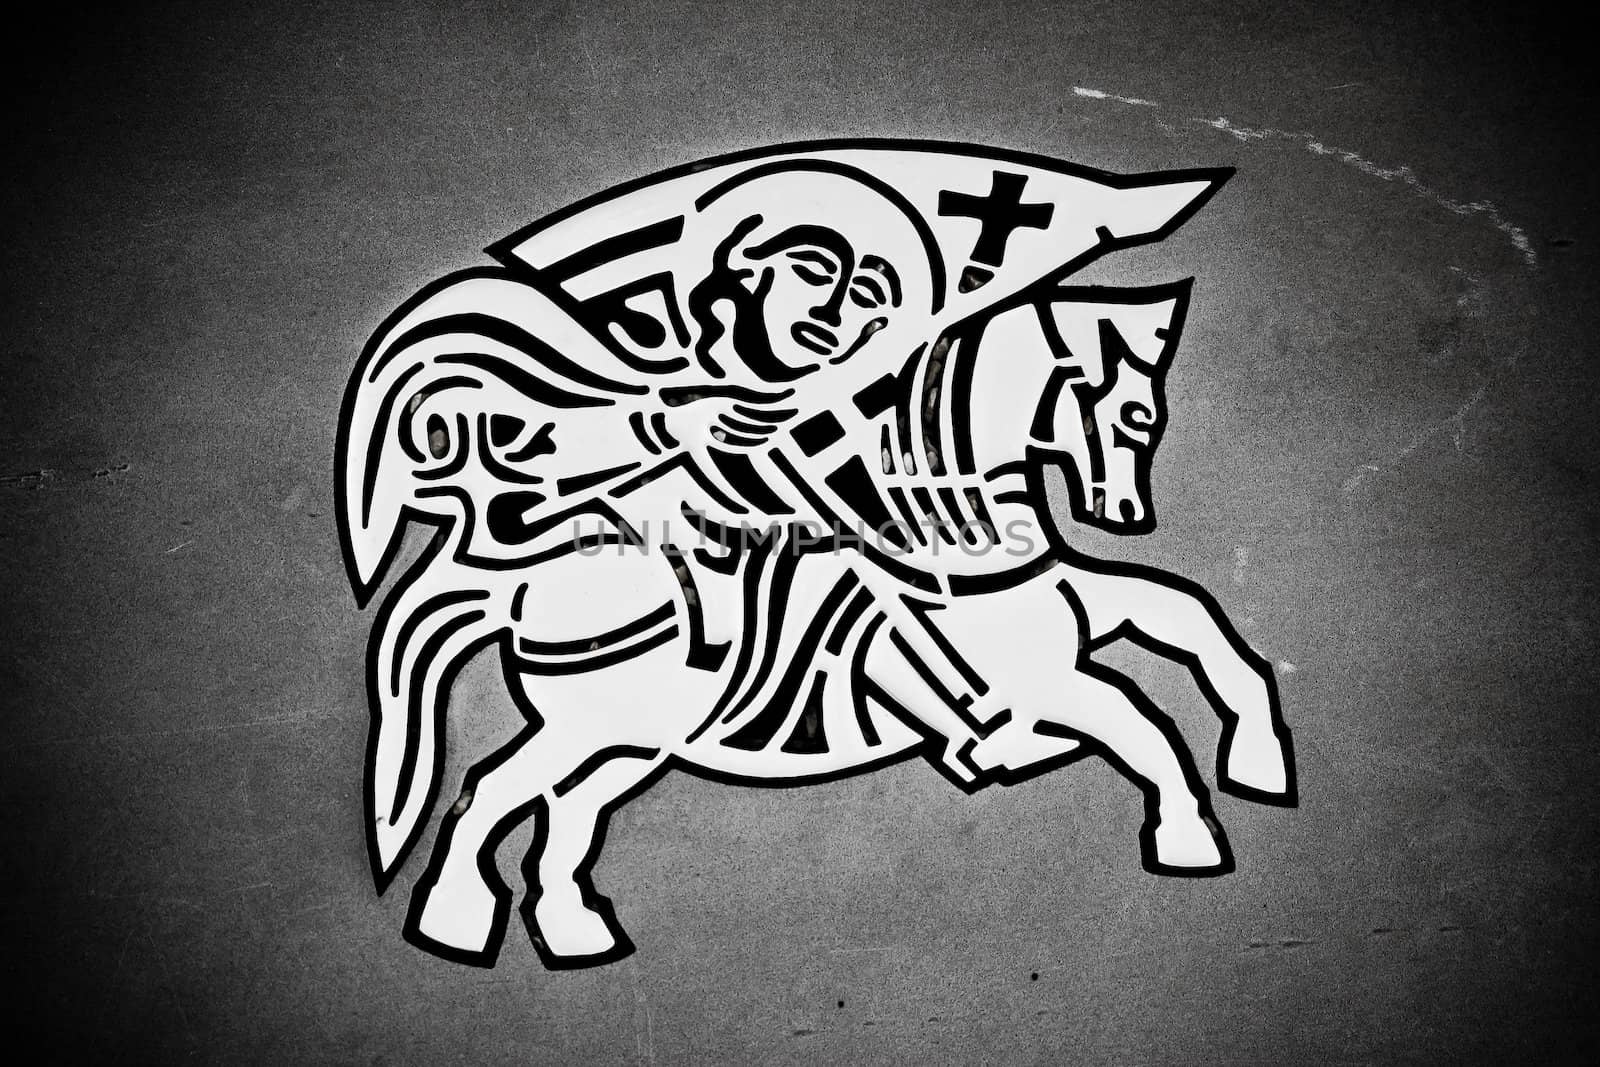 Knight on the horse - Zadar city seal by xbrchx